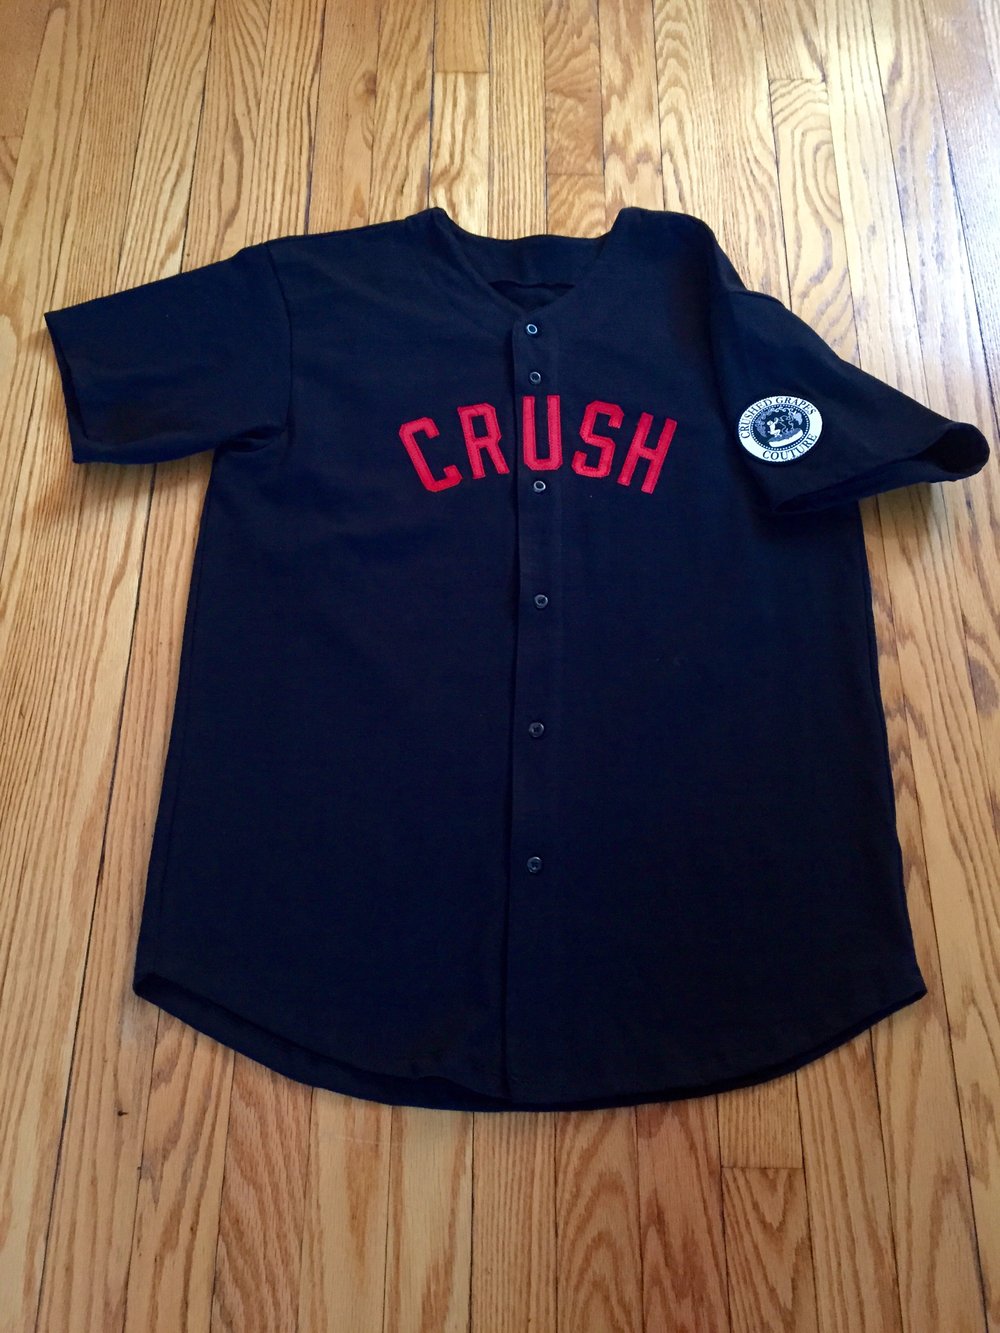 1986 Vintage Baseball Jersey in Black